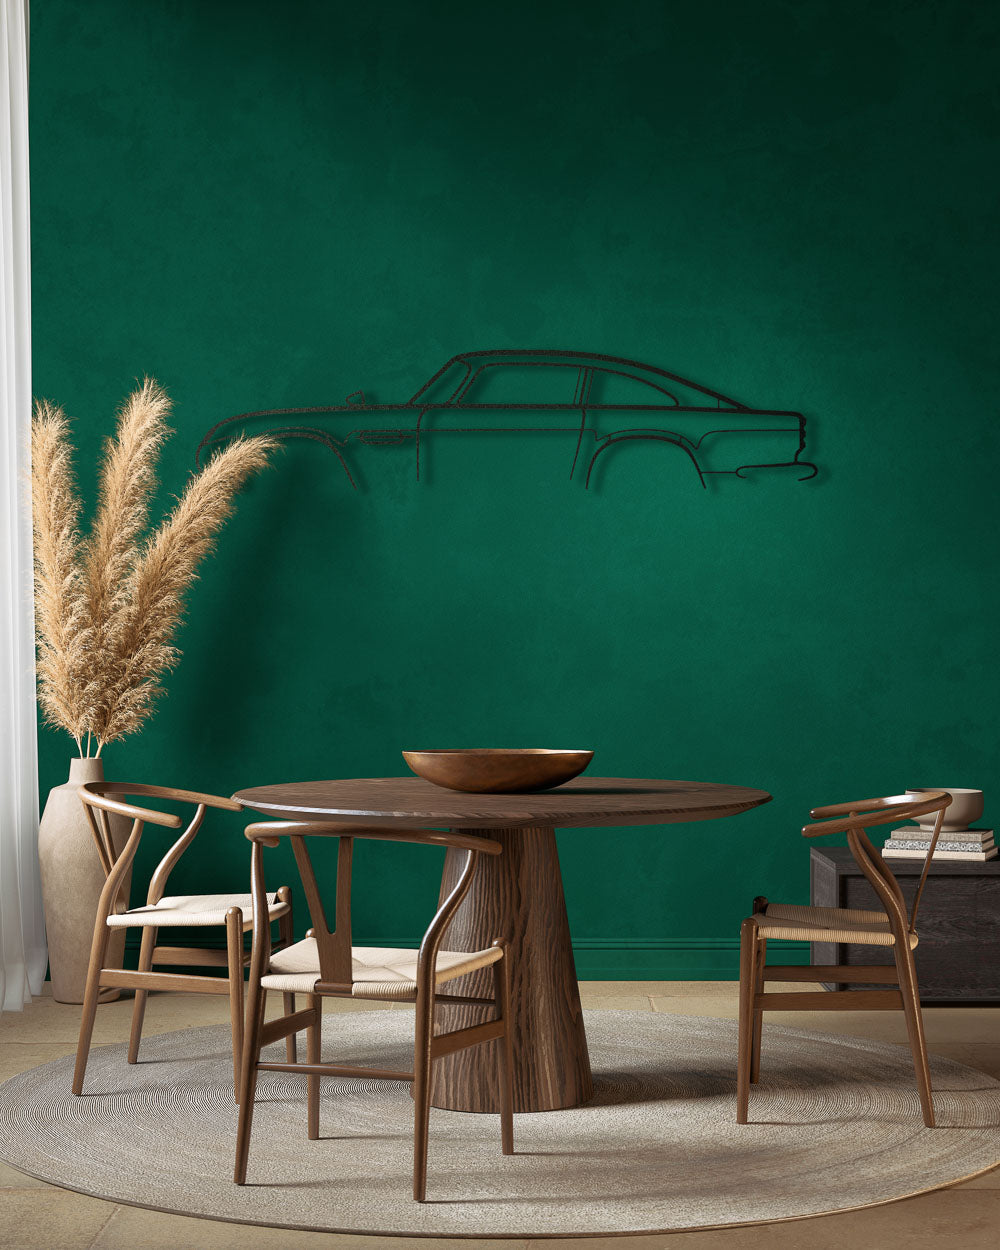 Nos - Aston Martin DB5 - Design Metal Silhouette